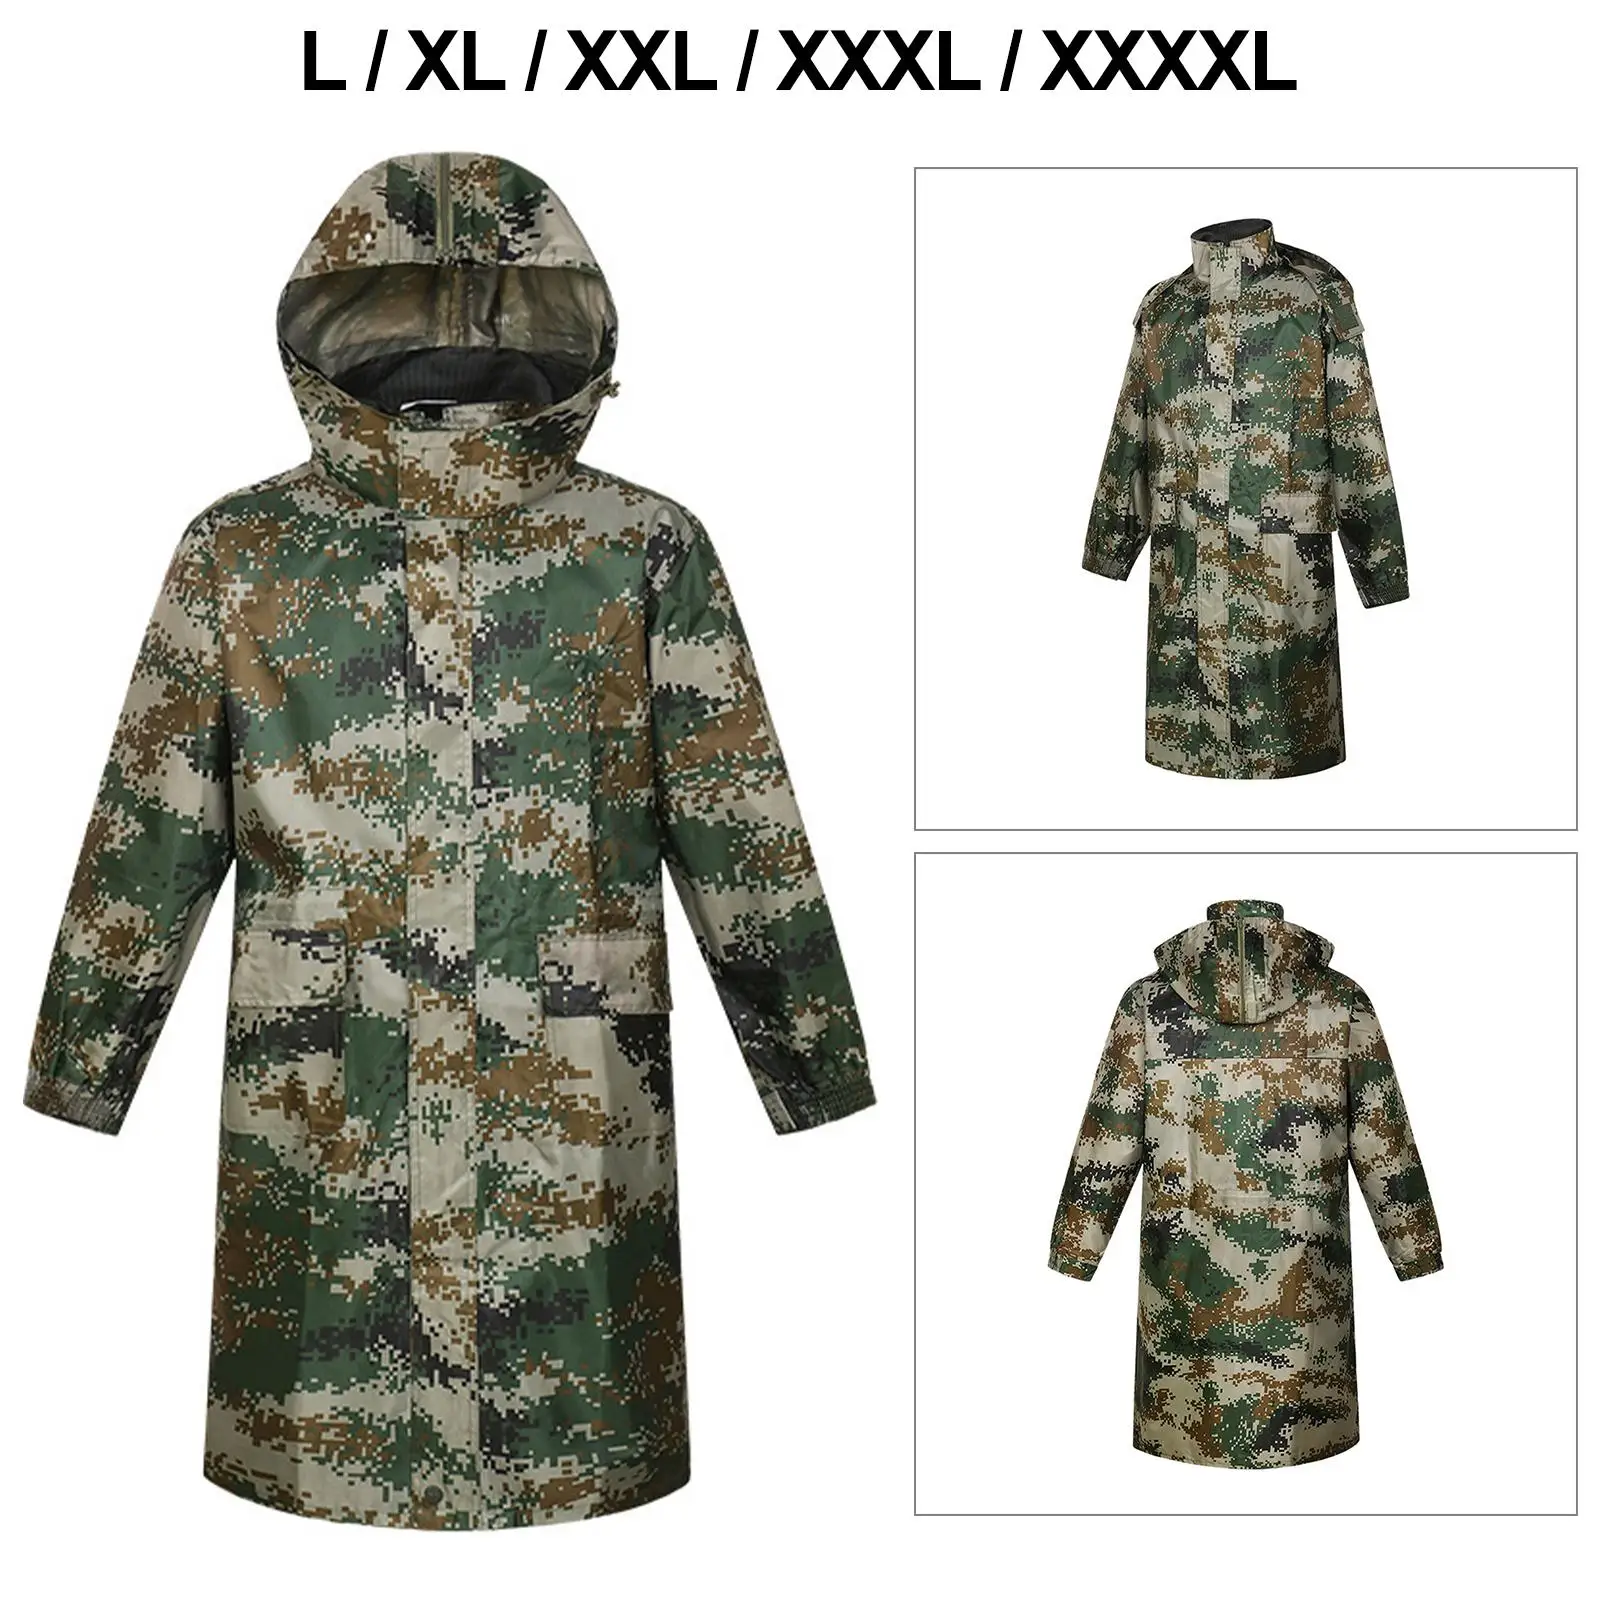 Raincoats with Hood Waterproof Camouflage Rain Jacket for Men Adults Fishing Hiking Travel